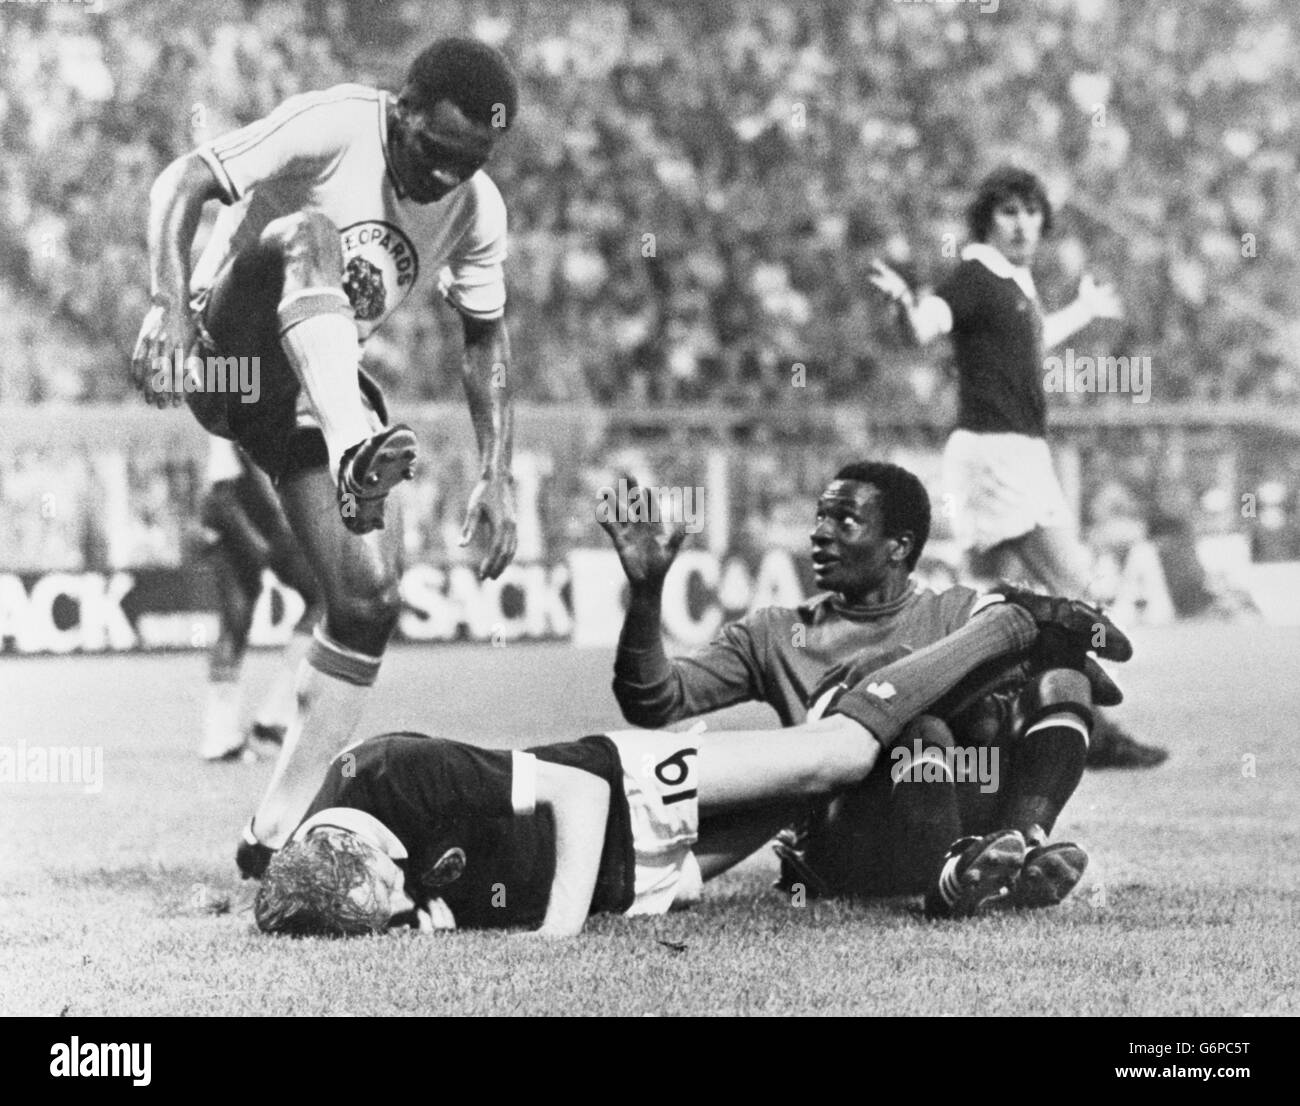 Soccer - FIFA World Cup West Germany 1974 - Group 2 - Zaire v Scotland - Westfalenstadion, Dortmund Stock Photo